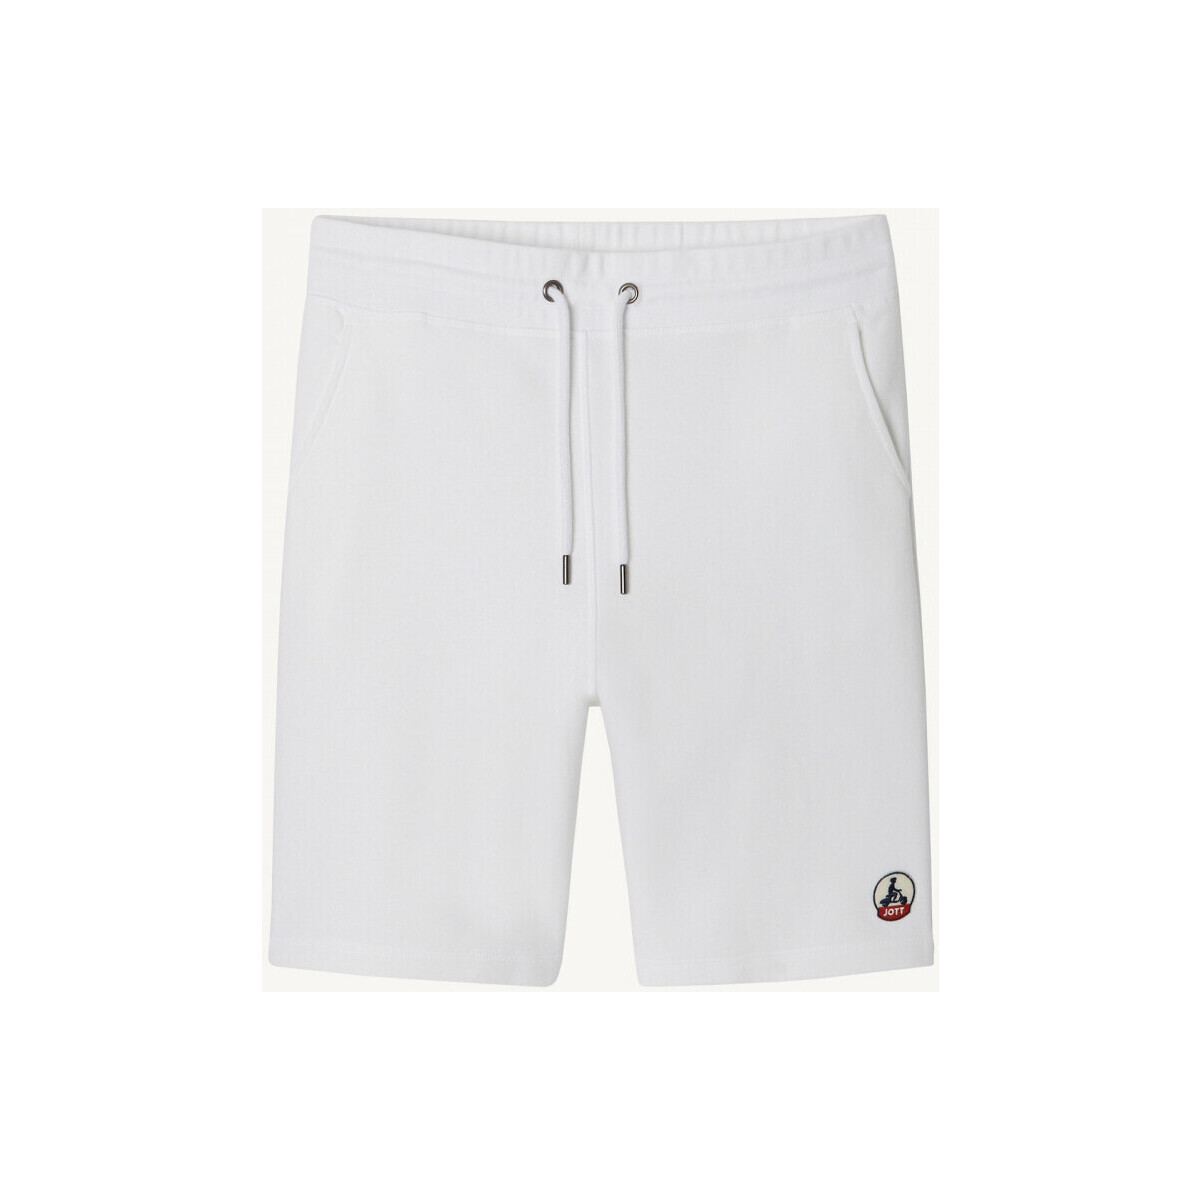 textil Hombre Shorts / Bermudas JOTT Medellin 2.0 Blanco